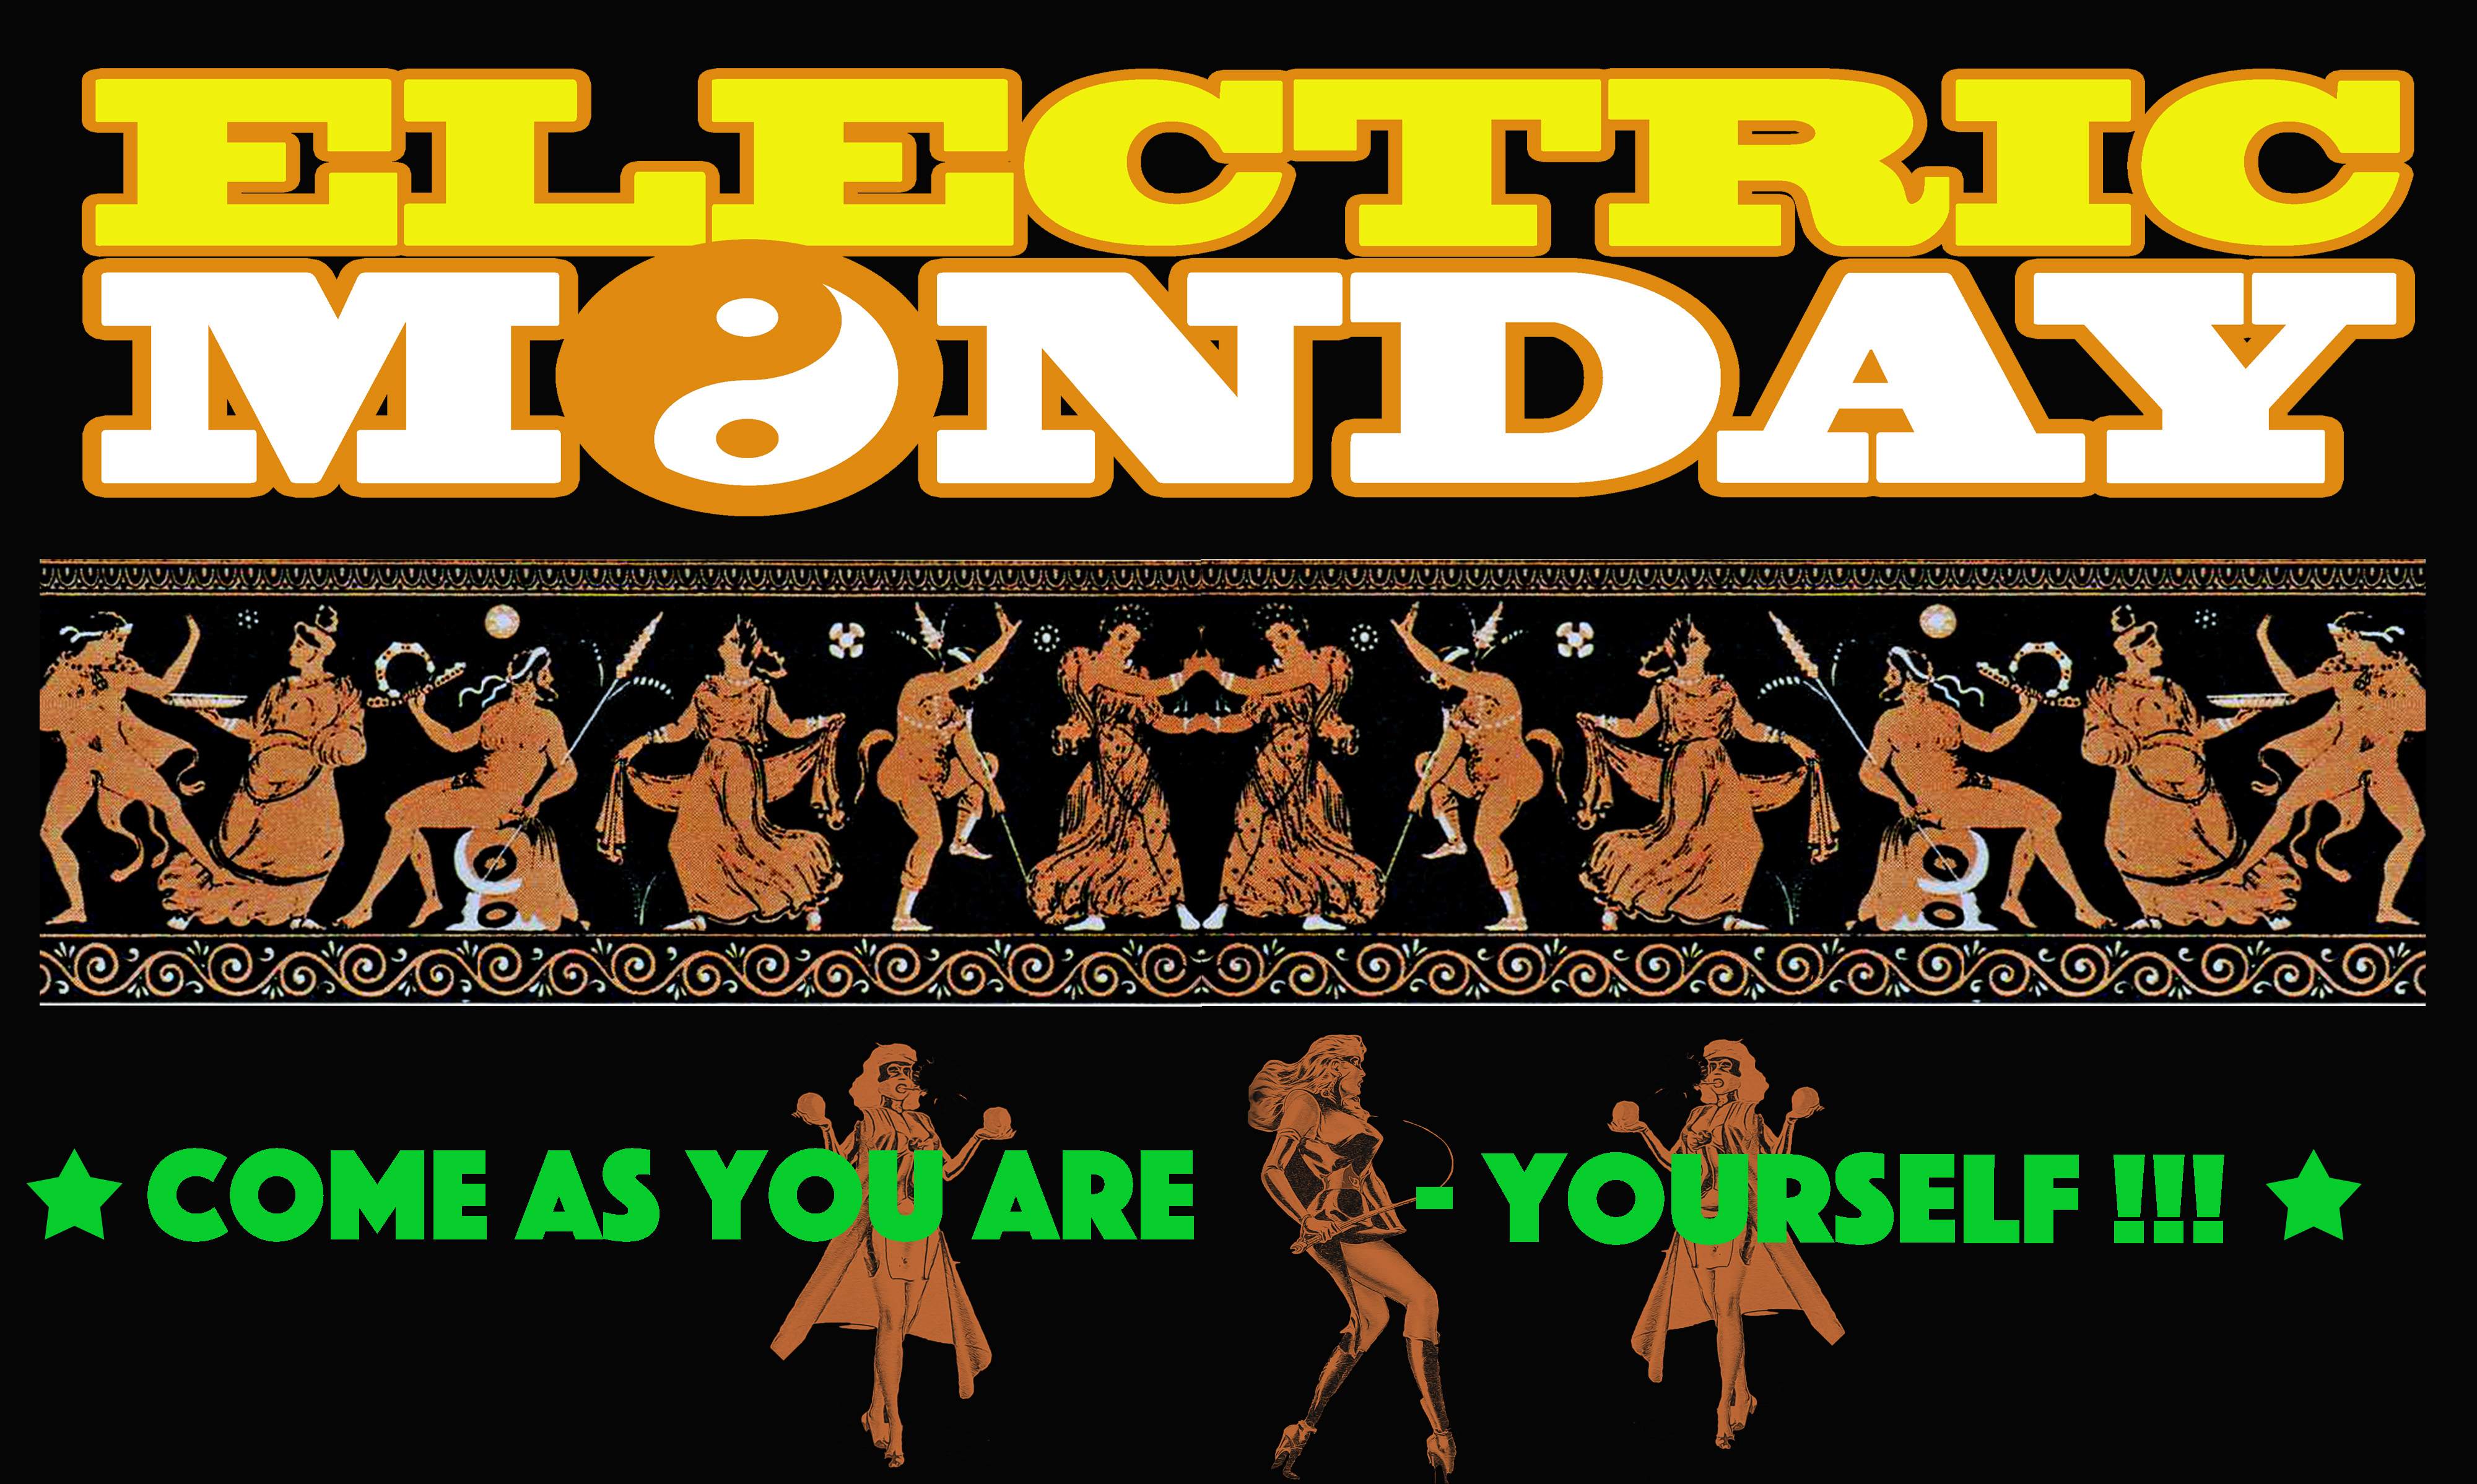 Electric Monday - フライヤー表